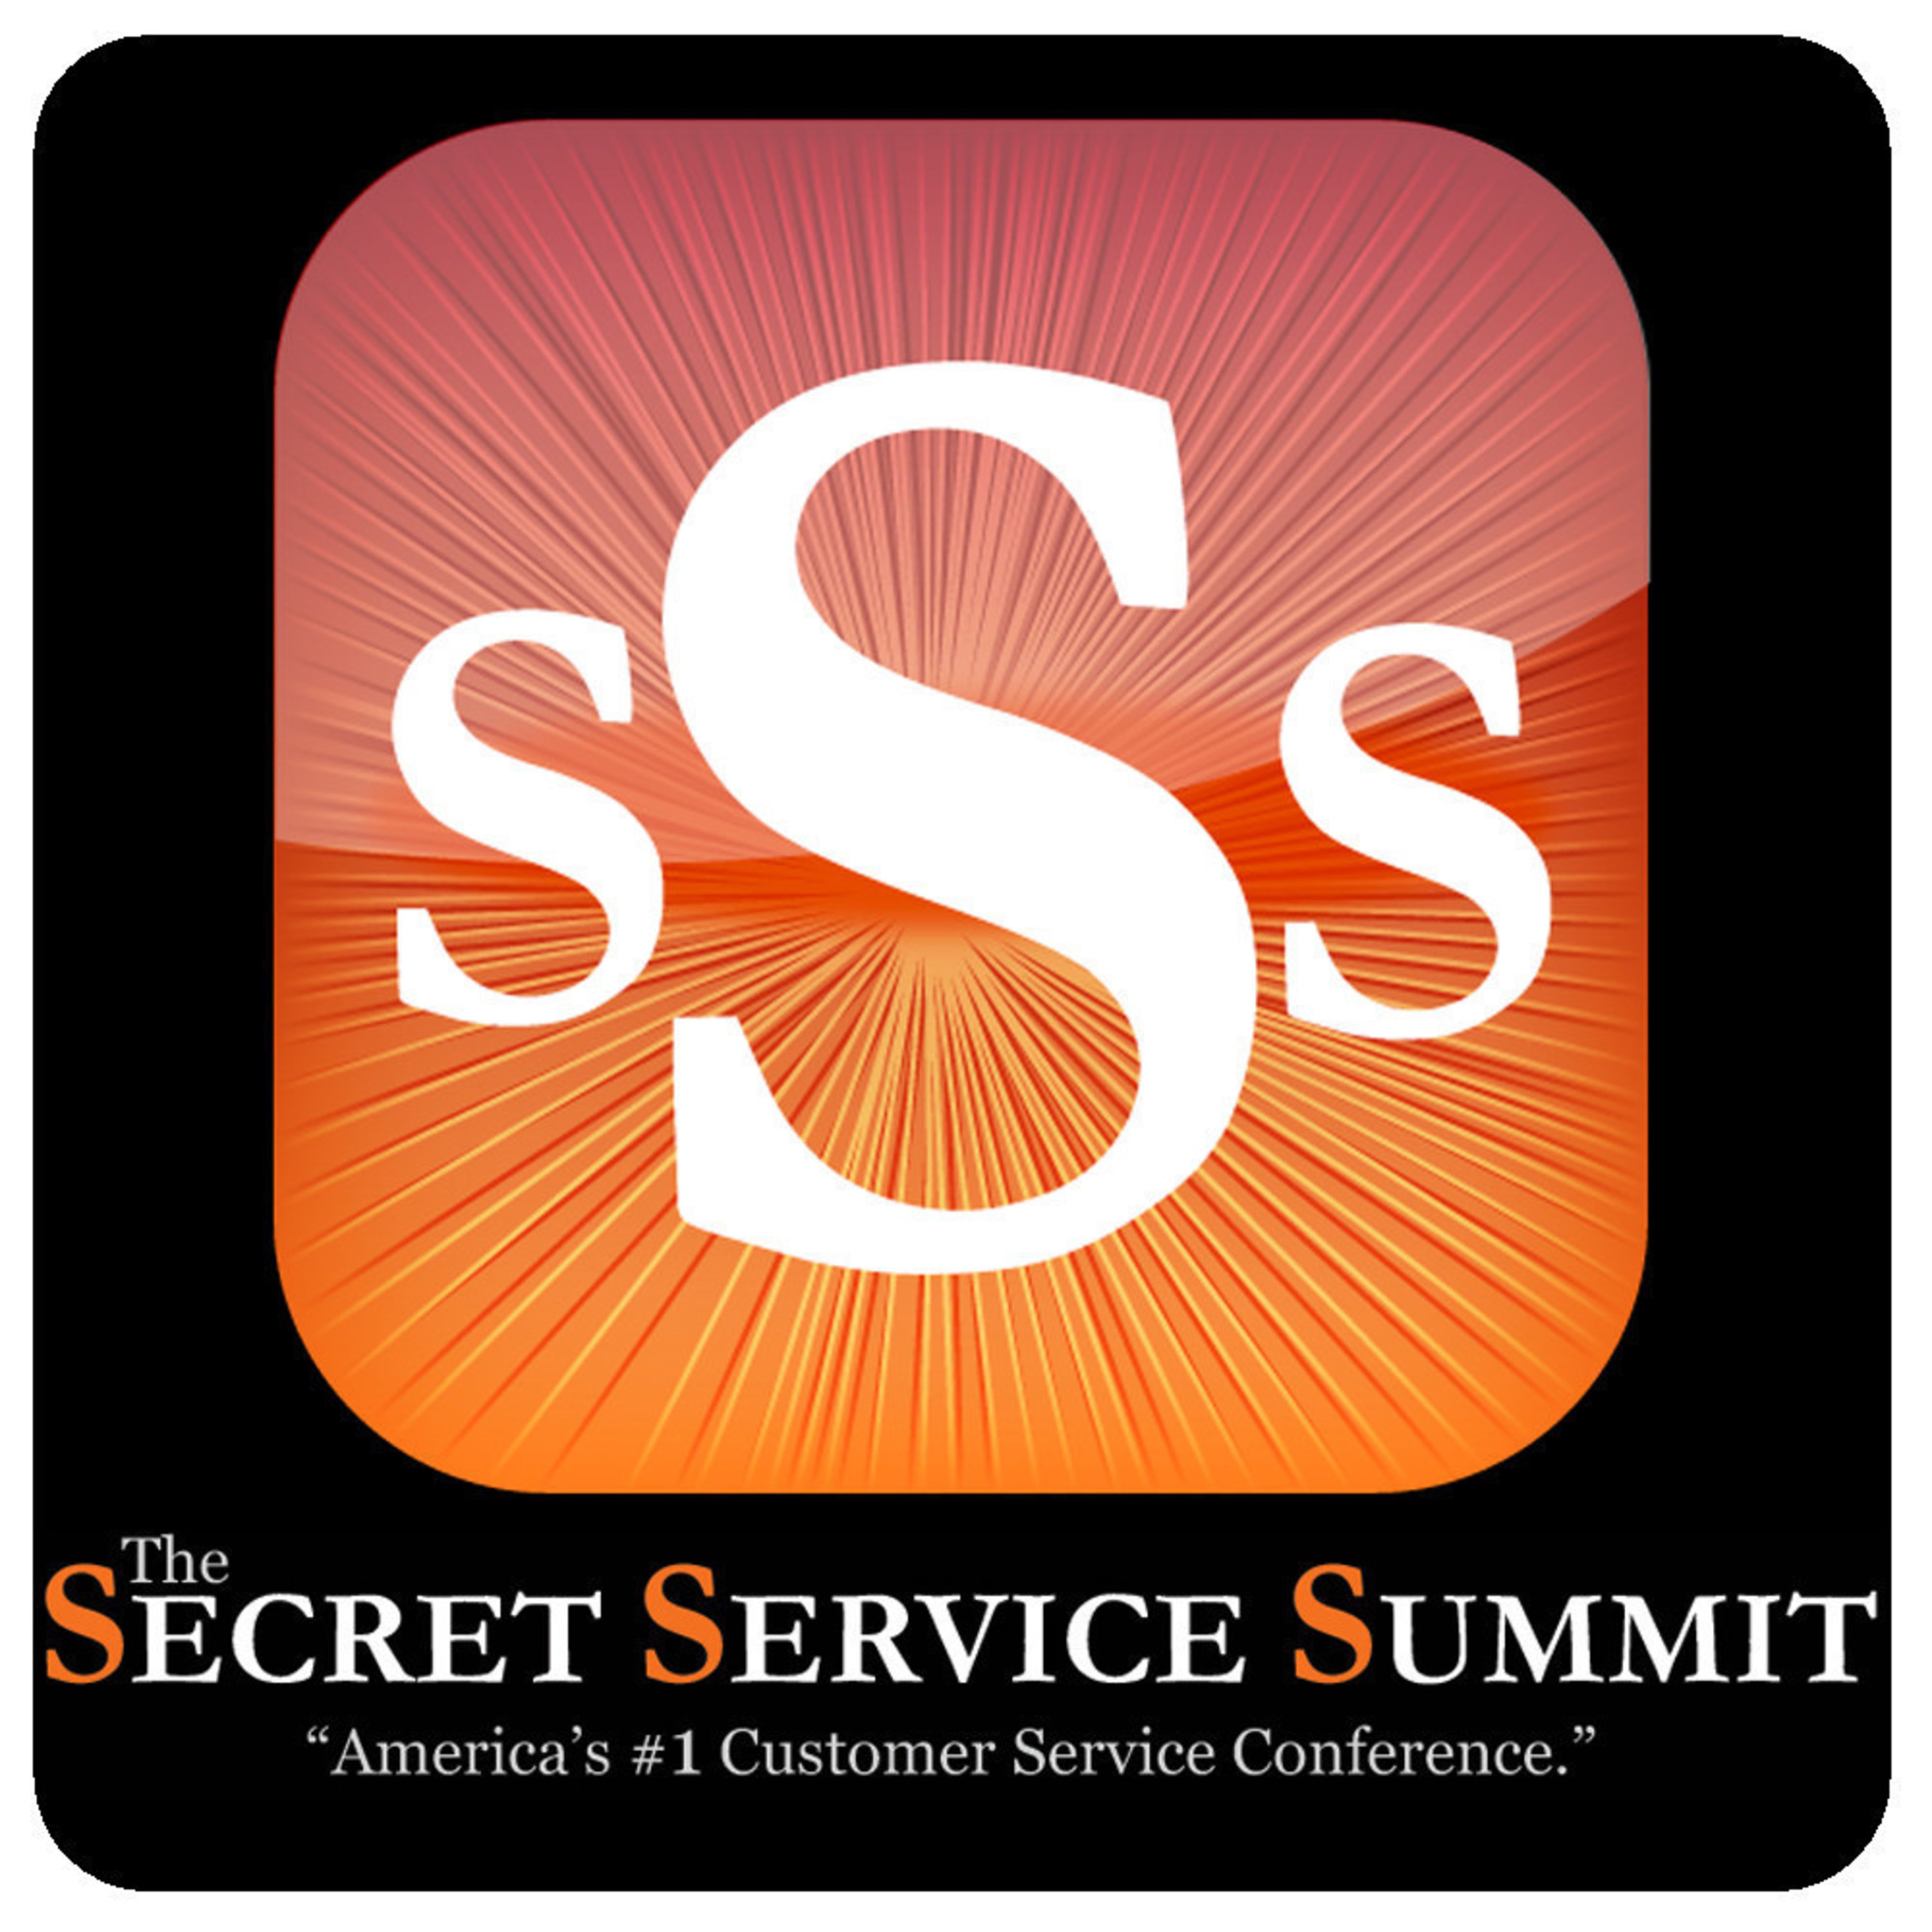 Learn more at secretservicesummit.com